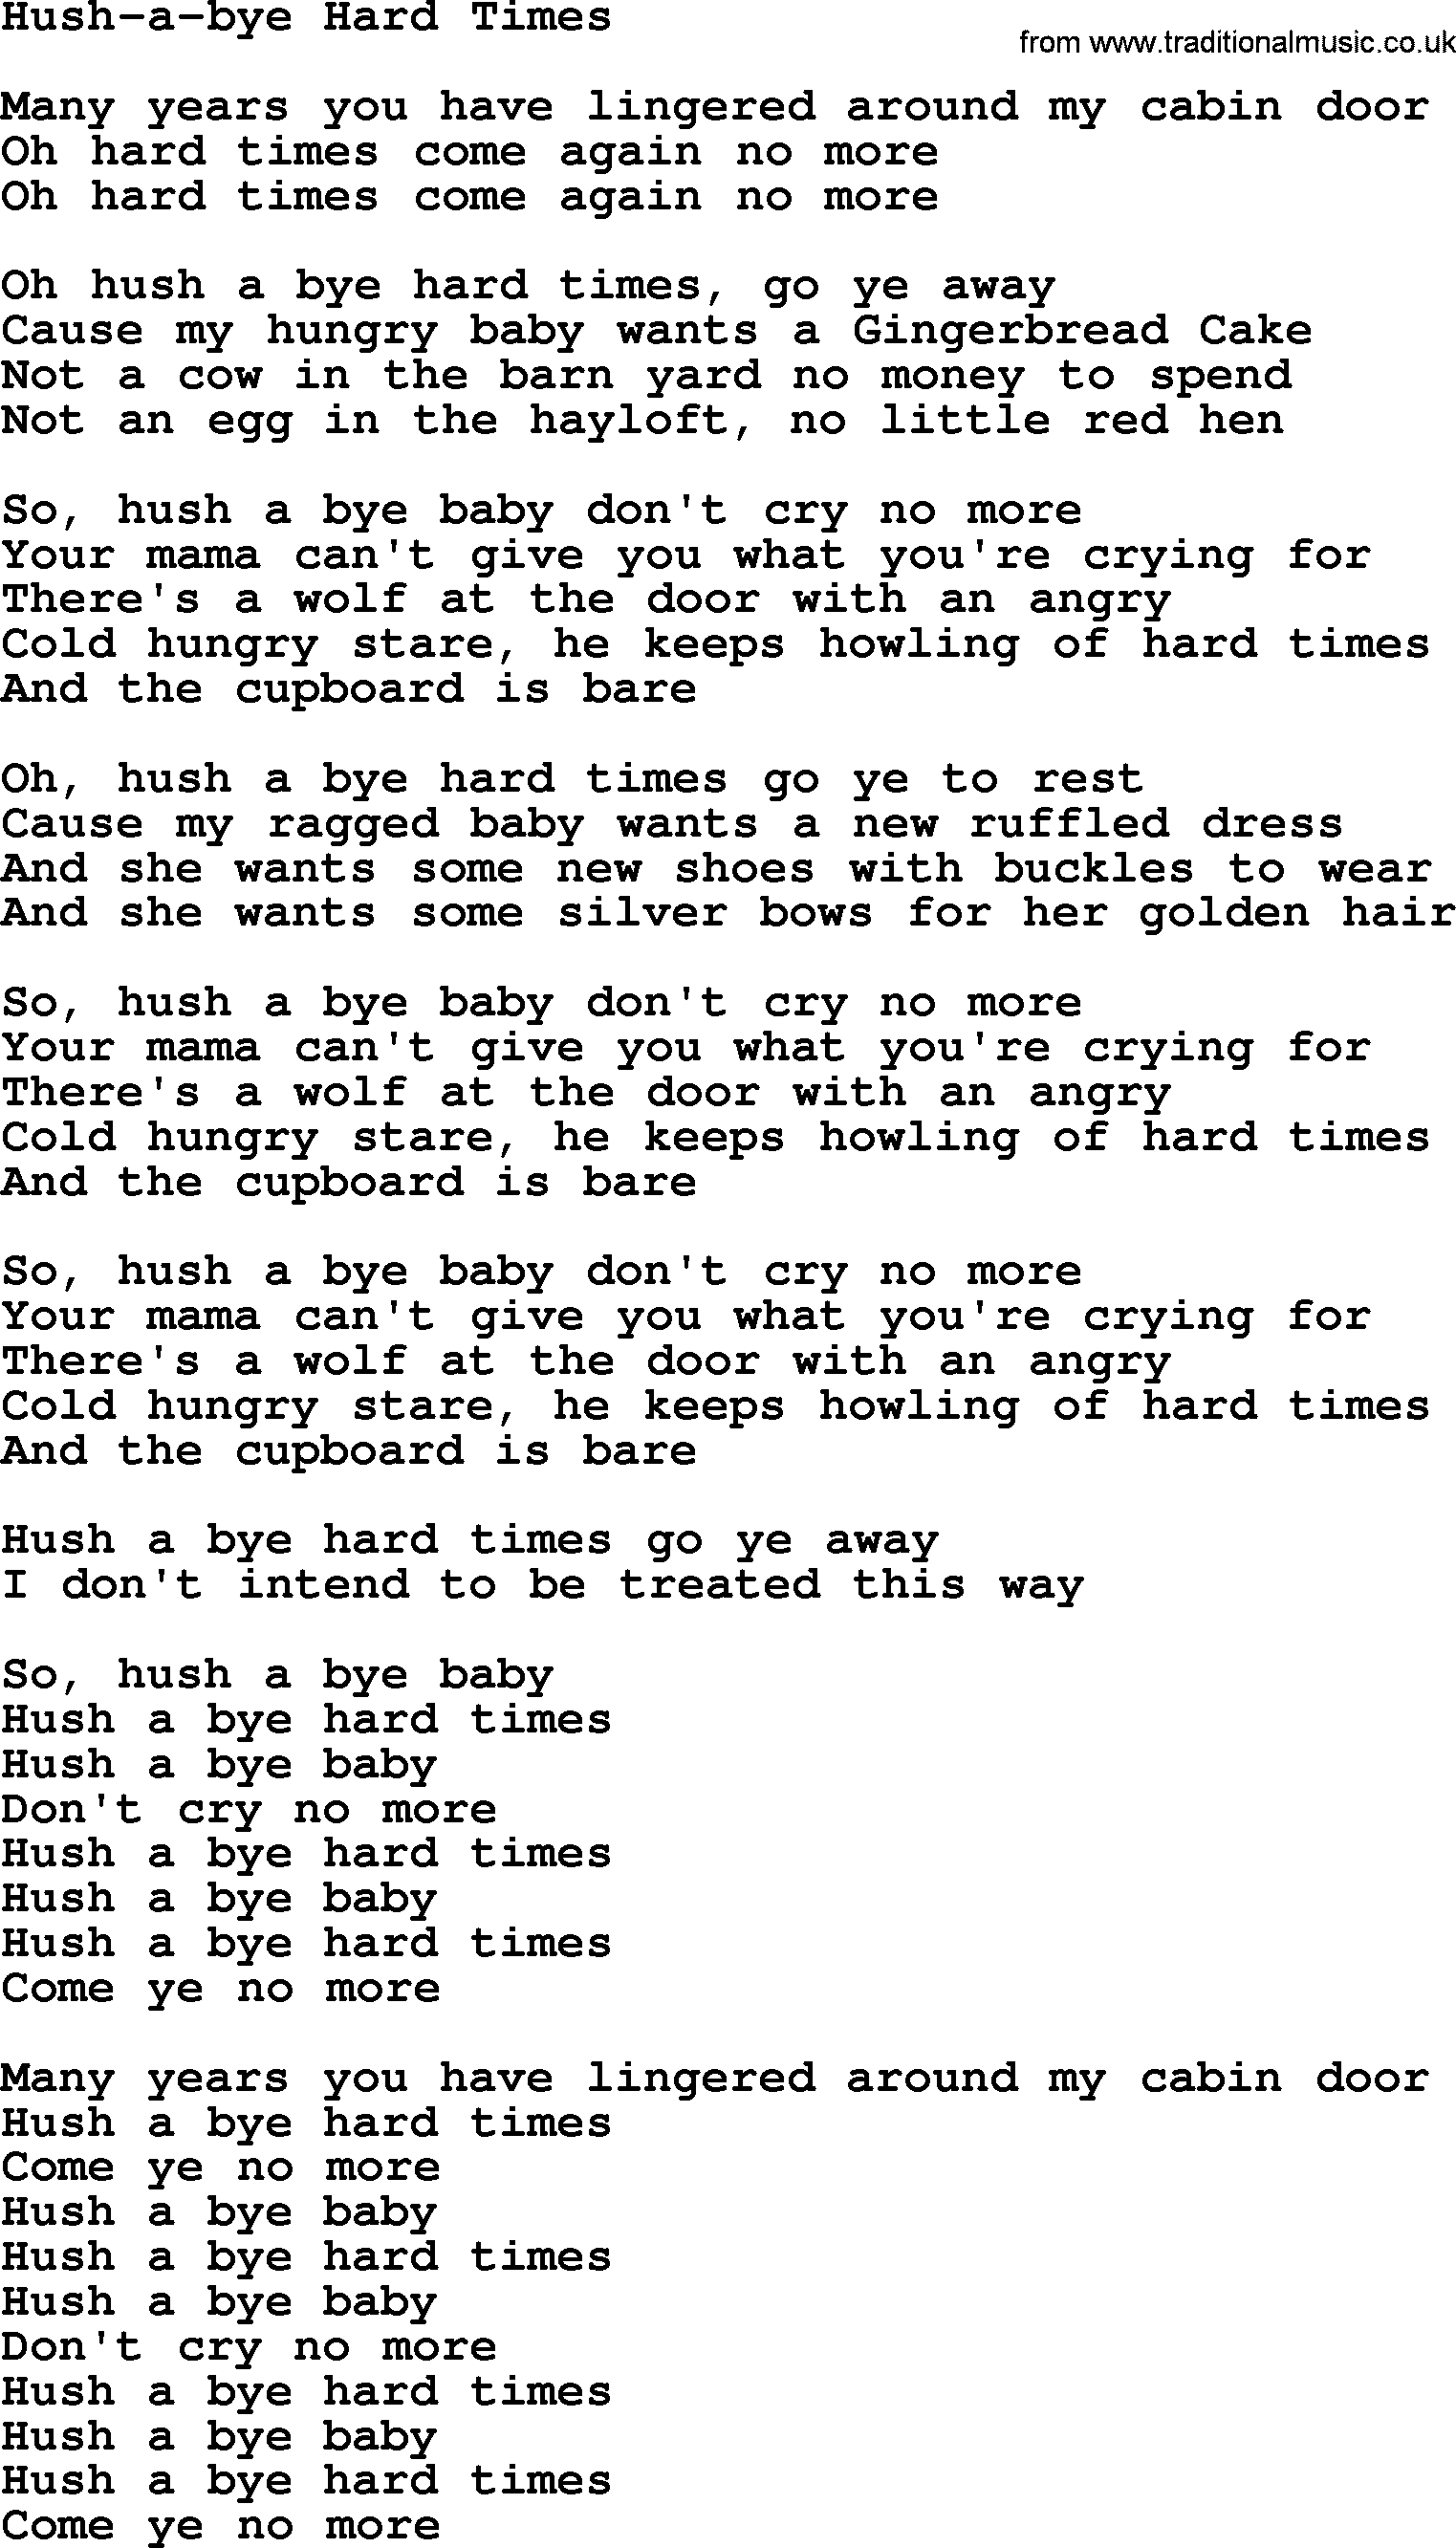 Dolly Parton song Hush-a-bye Hard Times.txt lyrics